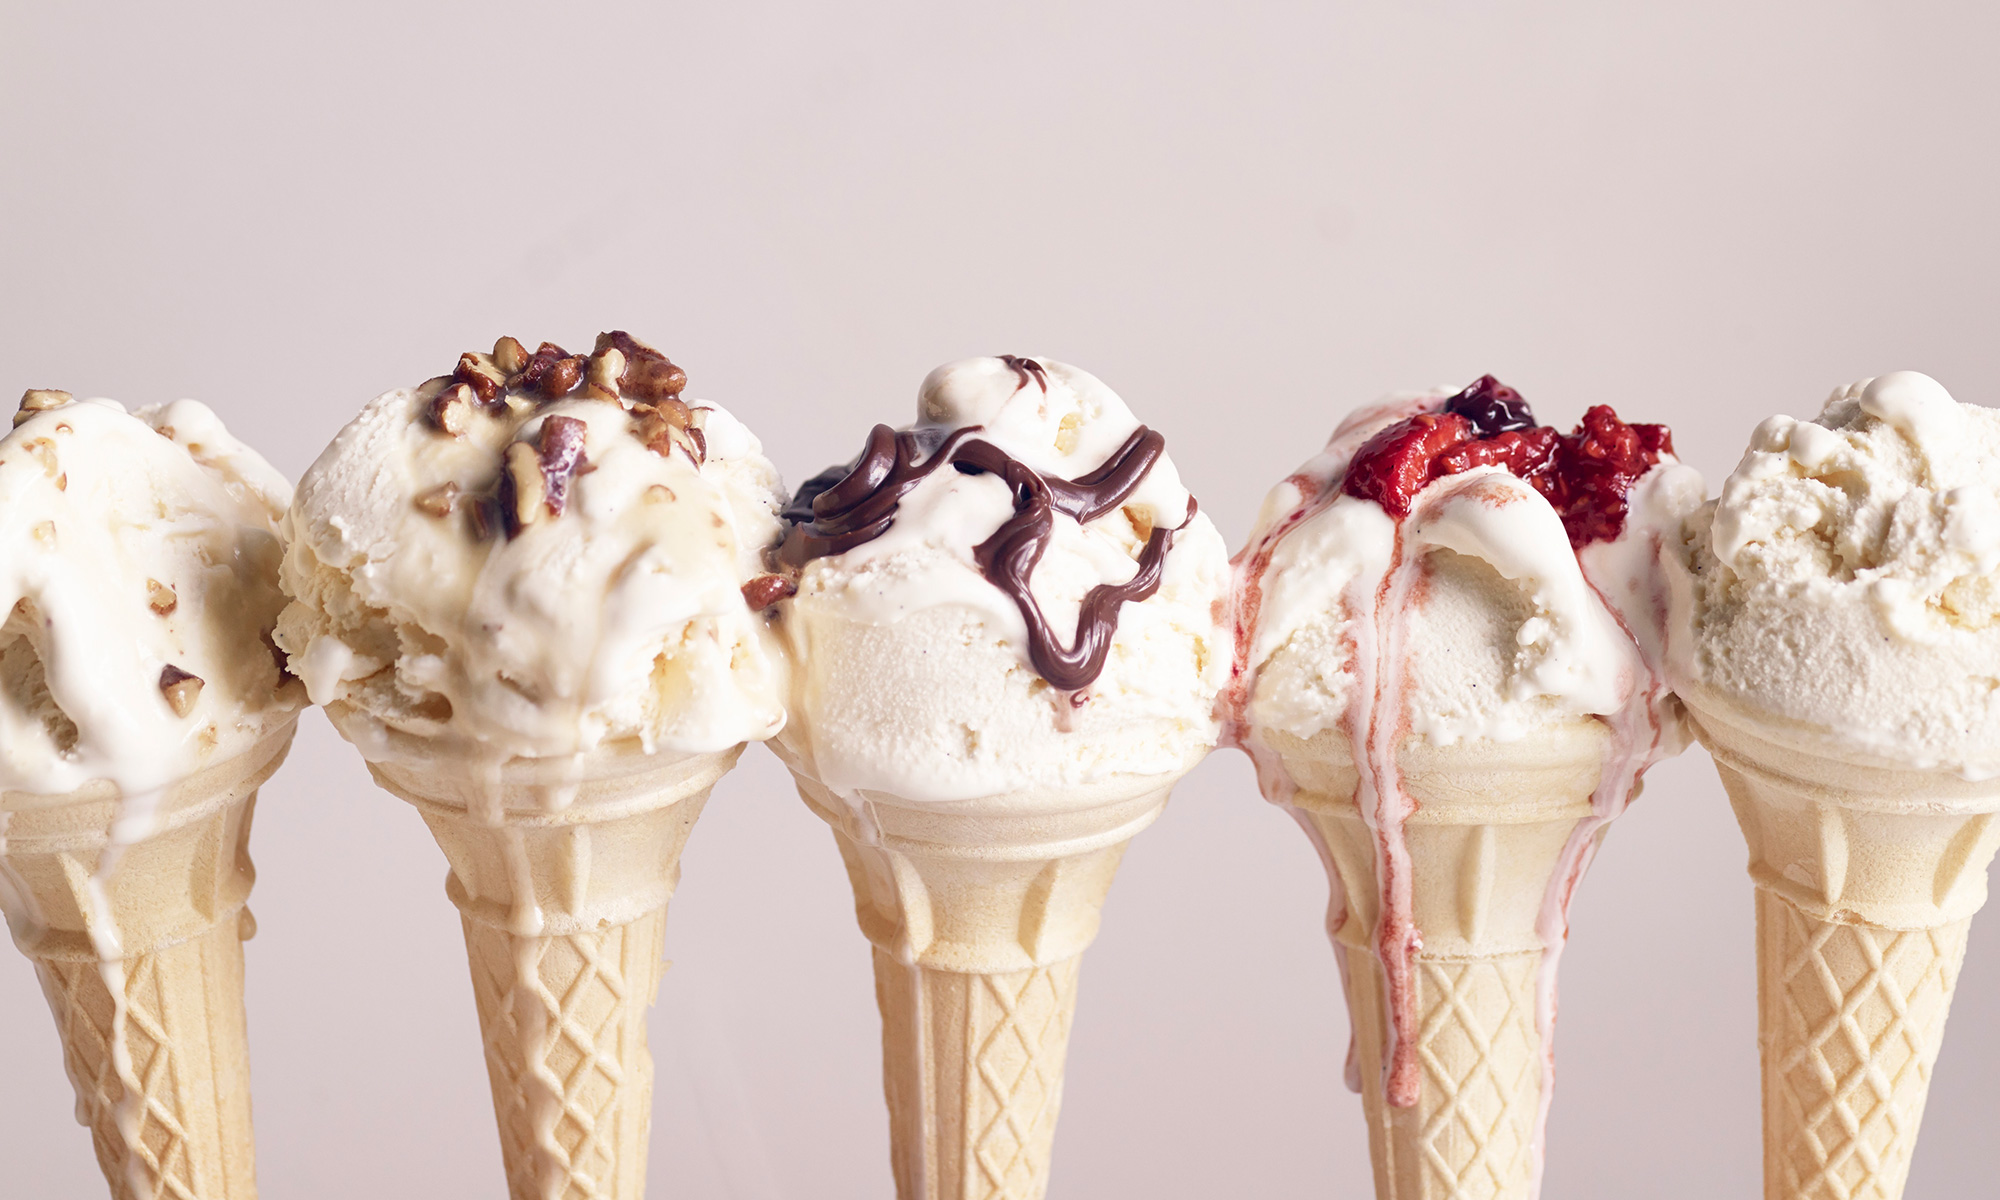 Ice cream recipes – Easy and delicious ice cream recipes